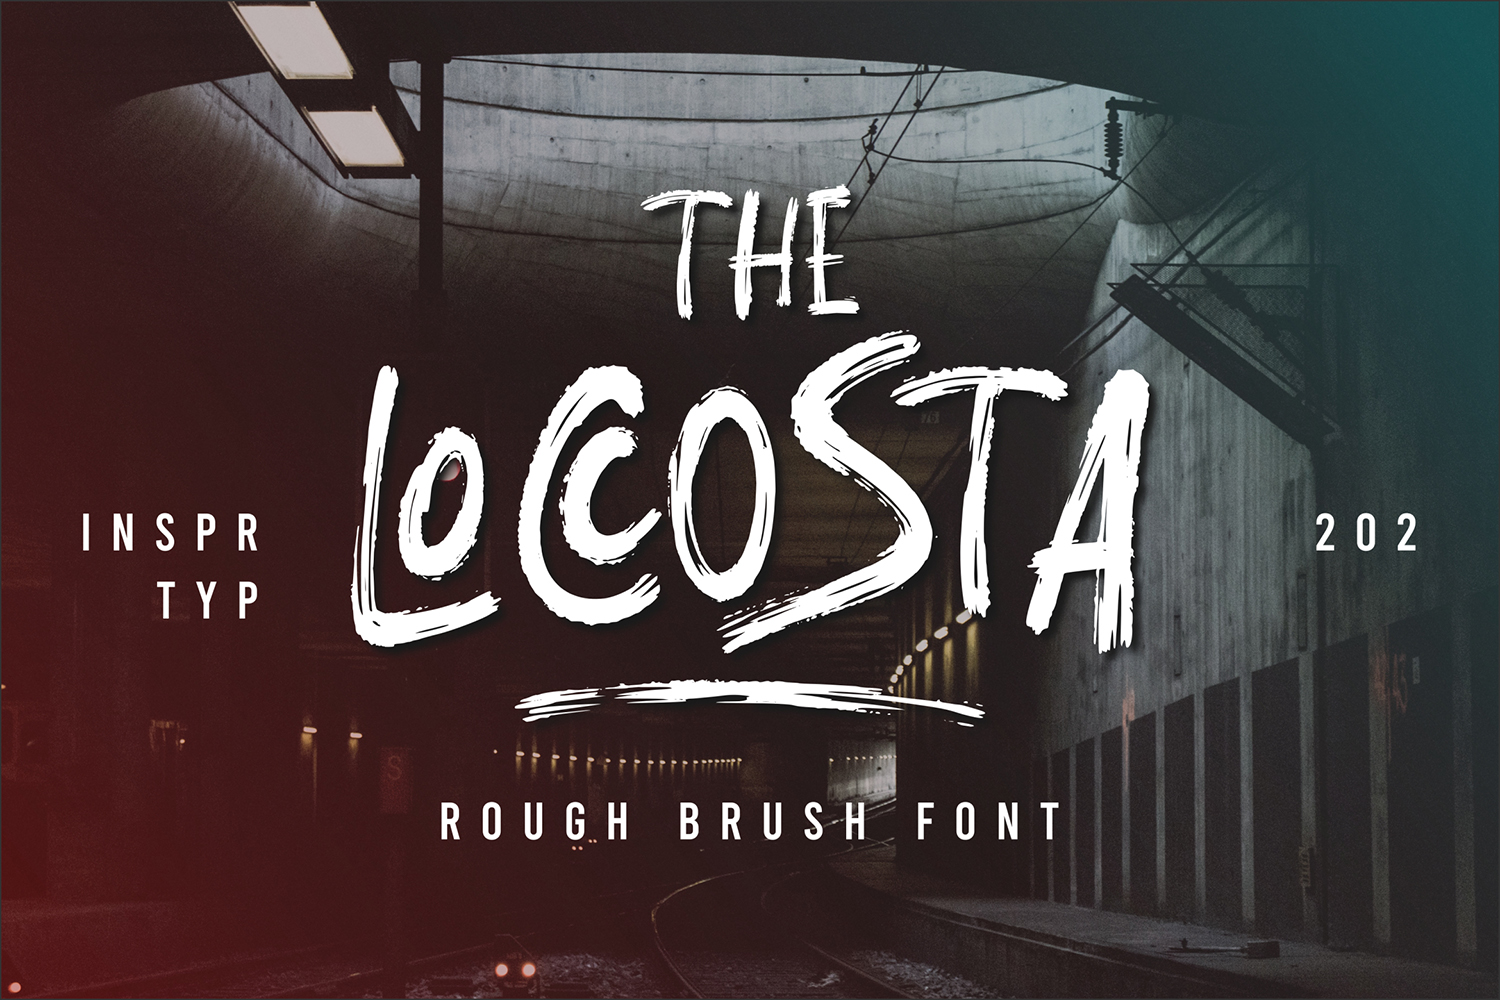 The Loccosta Free Font